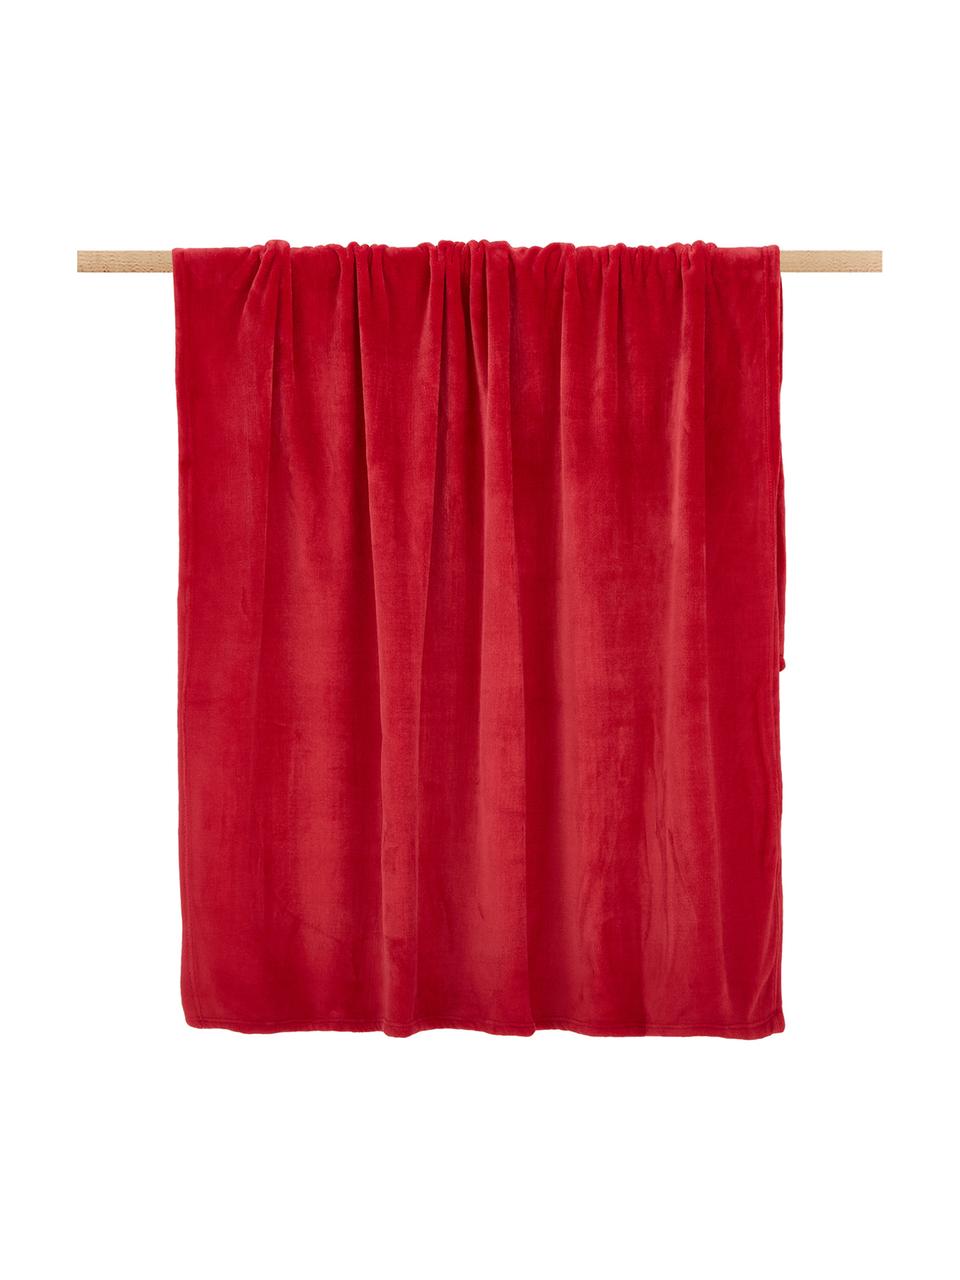 Kuscheldecke Doudou in Rot, Polyester, Rot, 130 x 160 cm